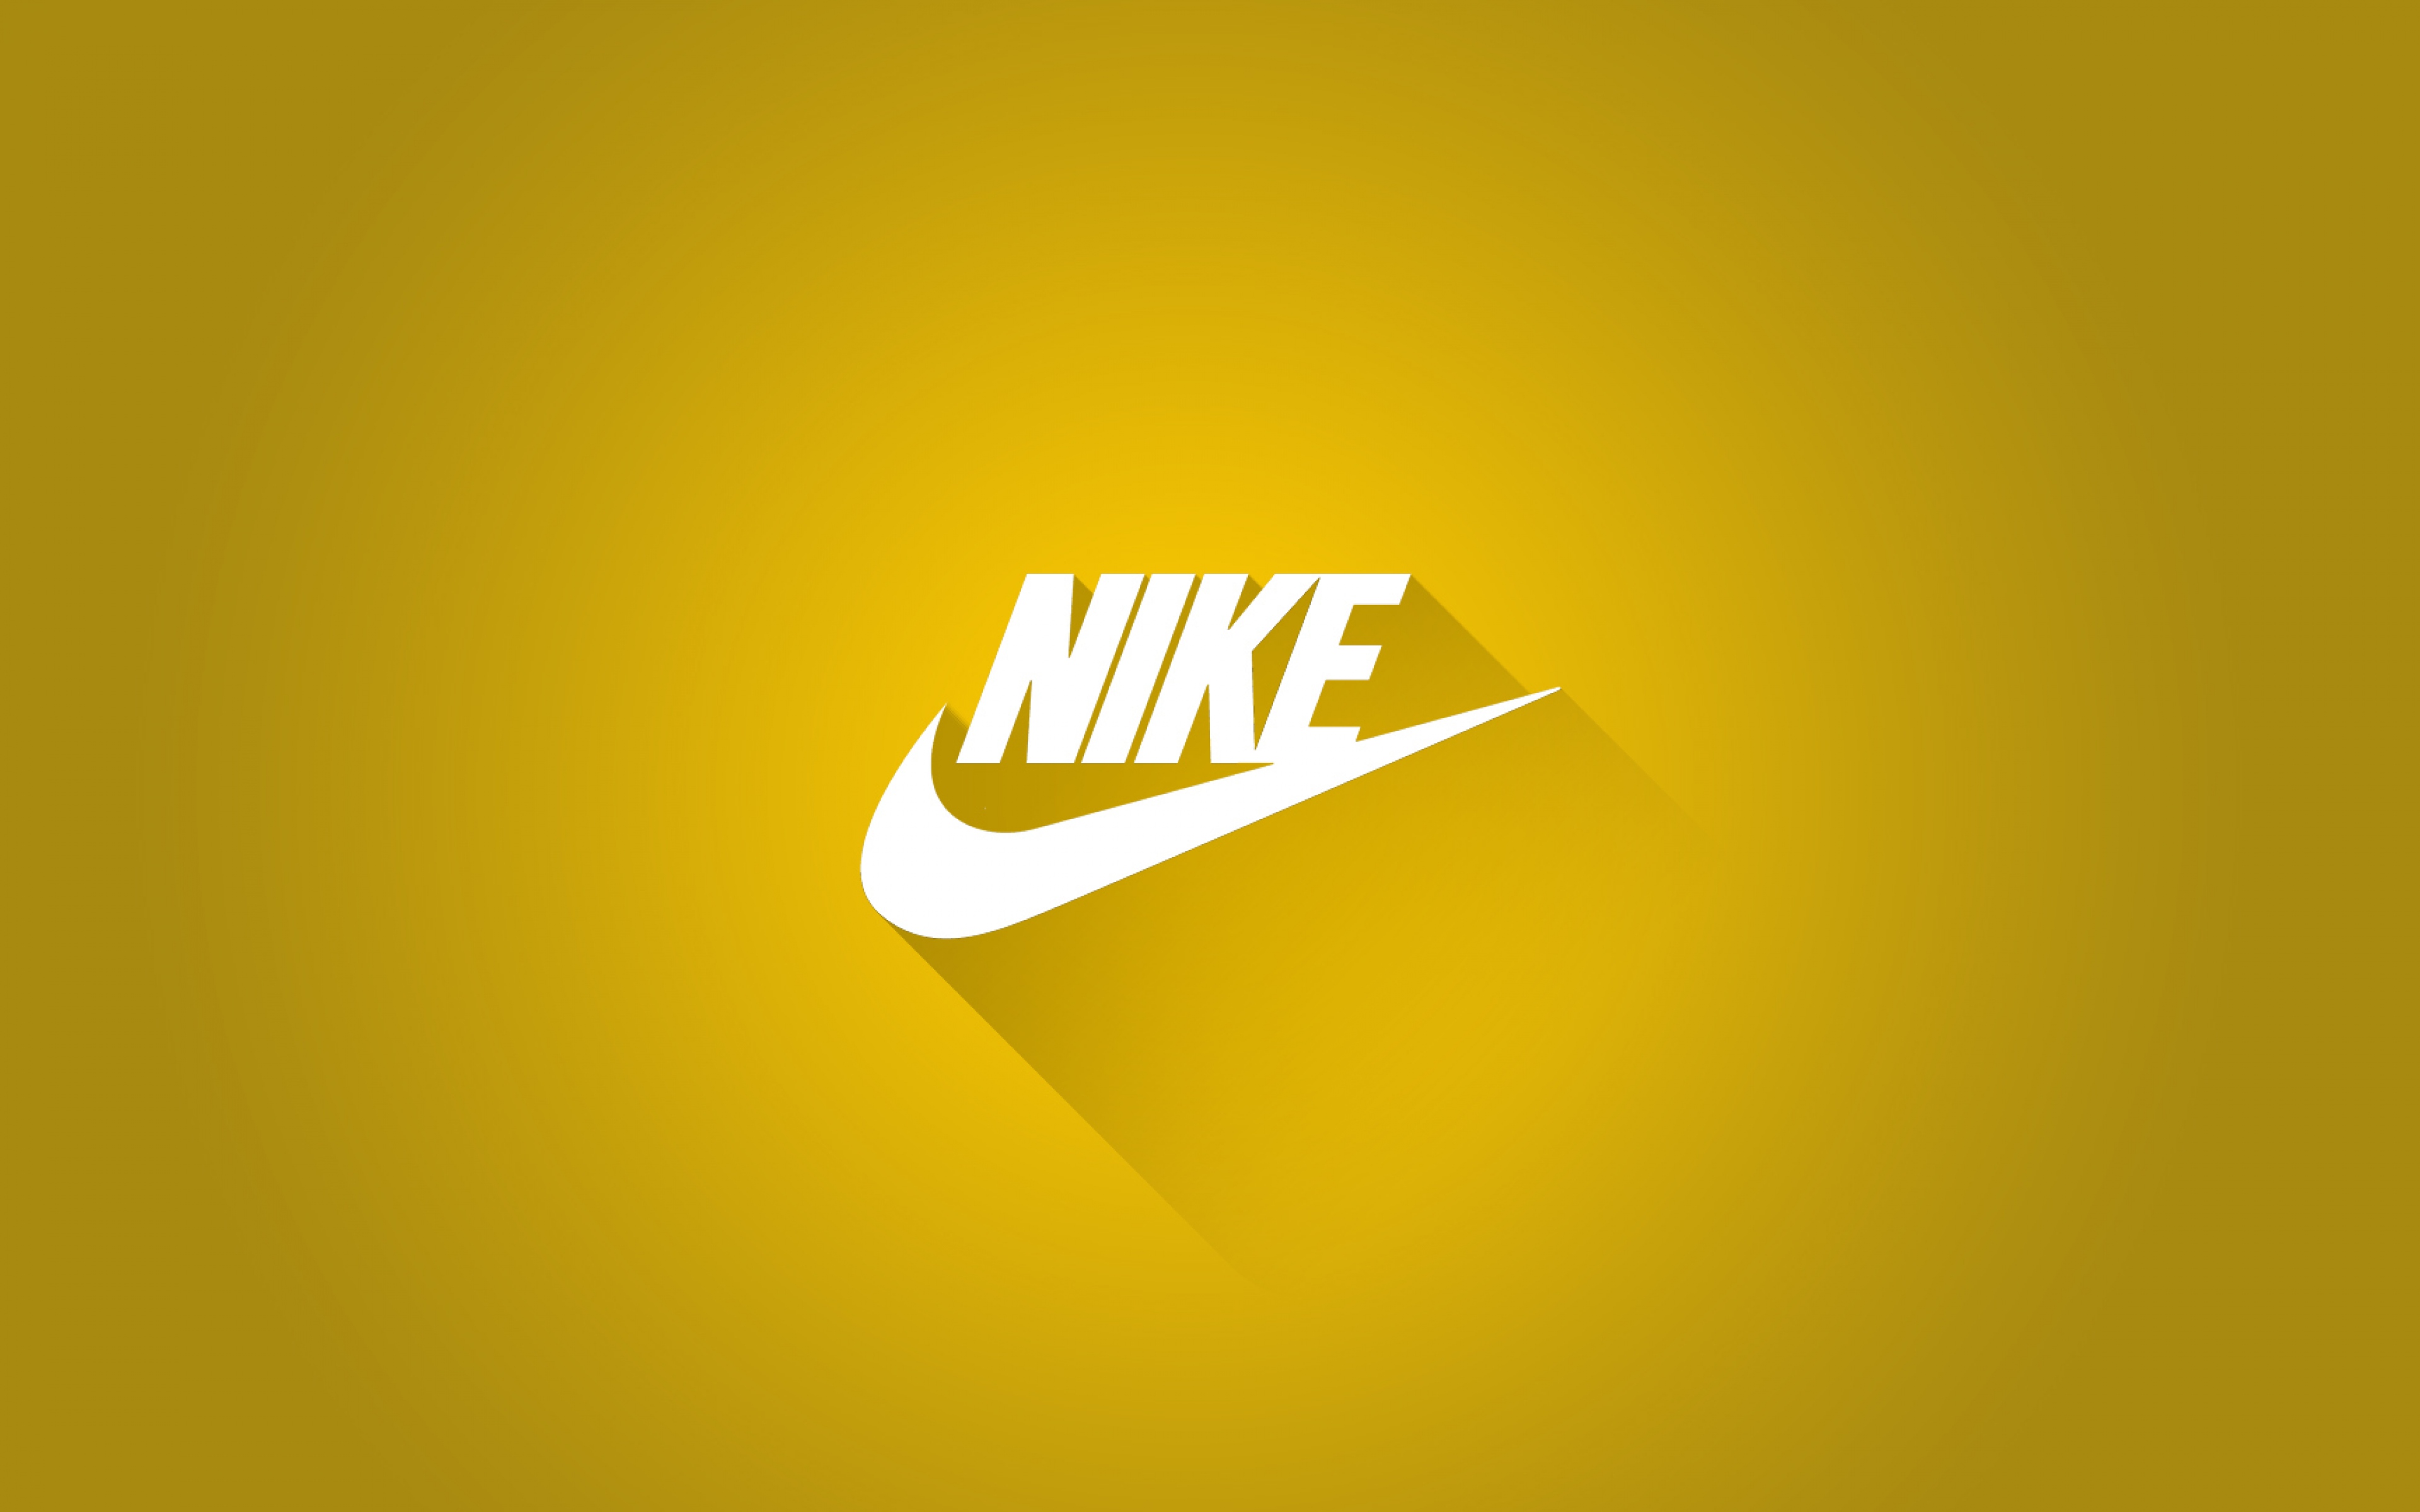 Nike Download Hd Wallpapers - Wallpaperforu